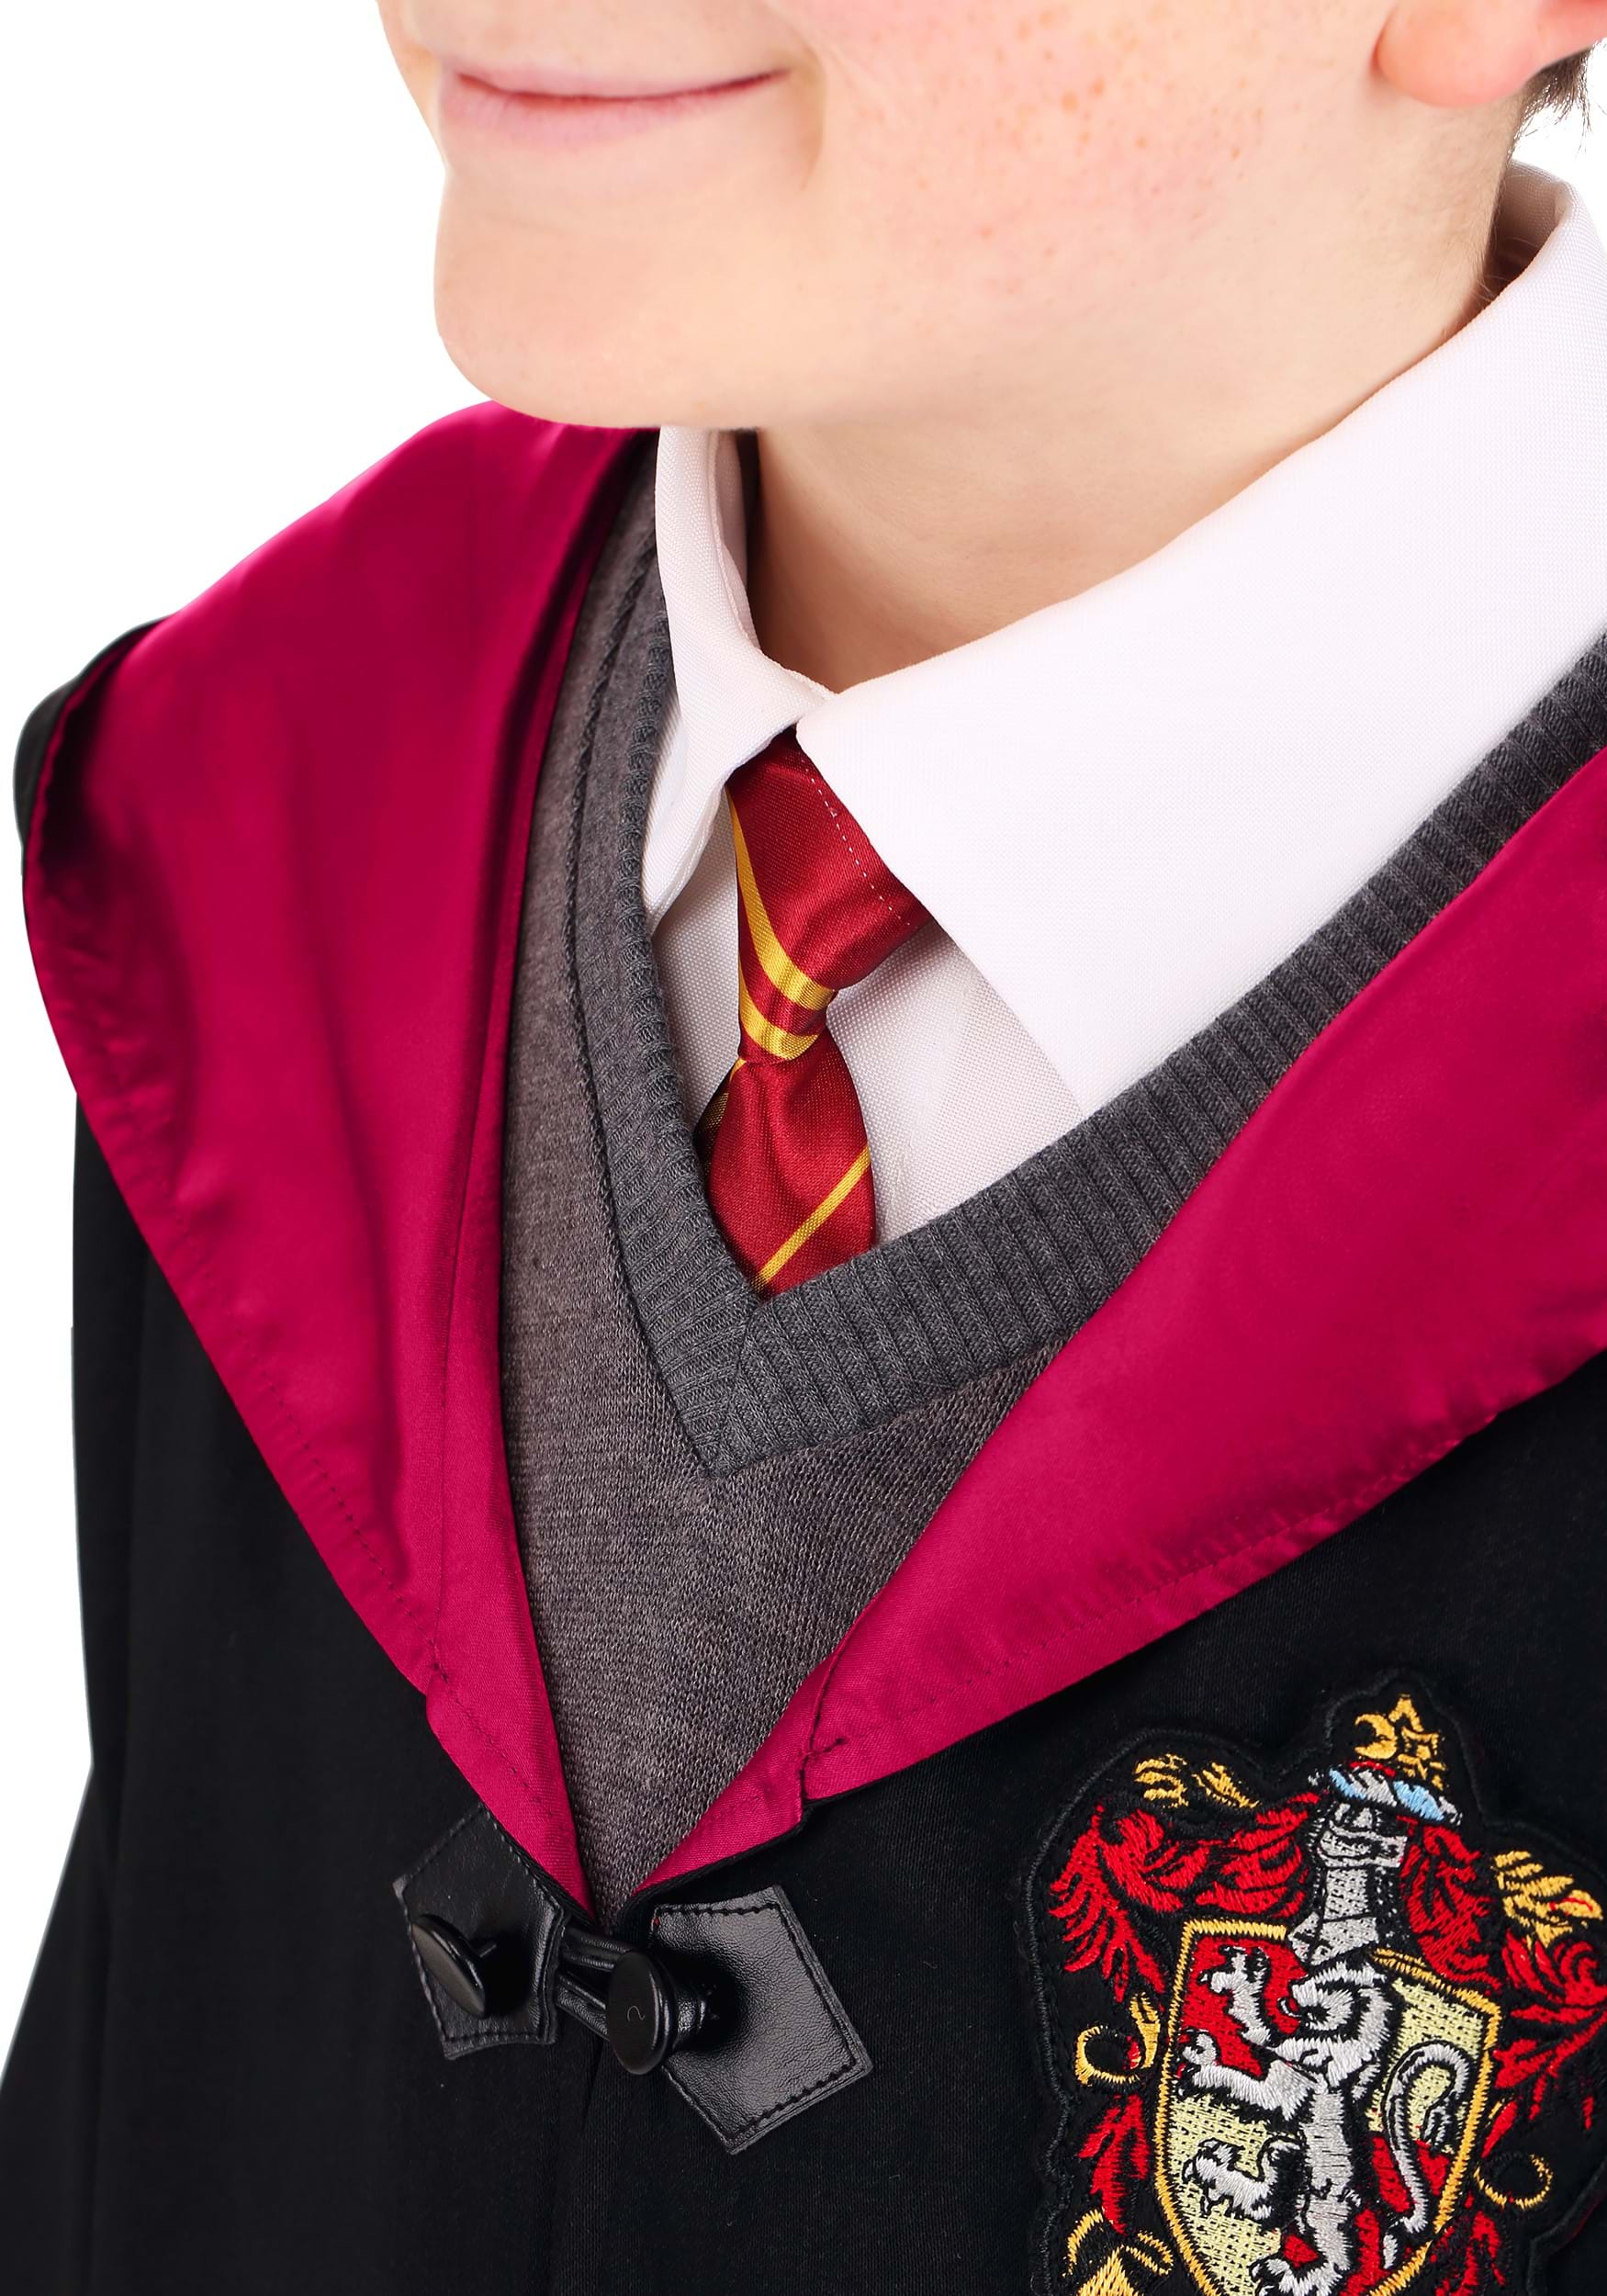 Boy's Deluxe Harry Potter Costume